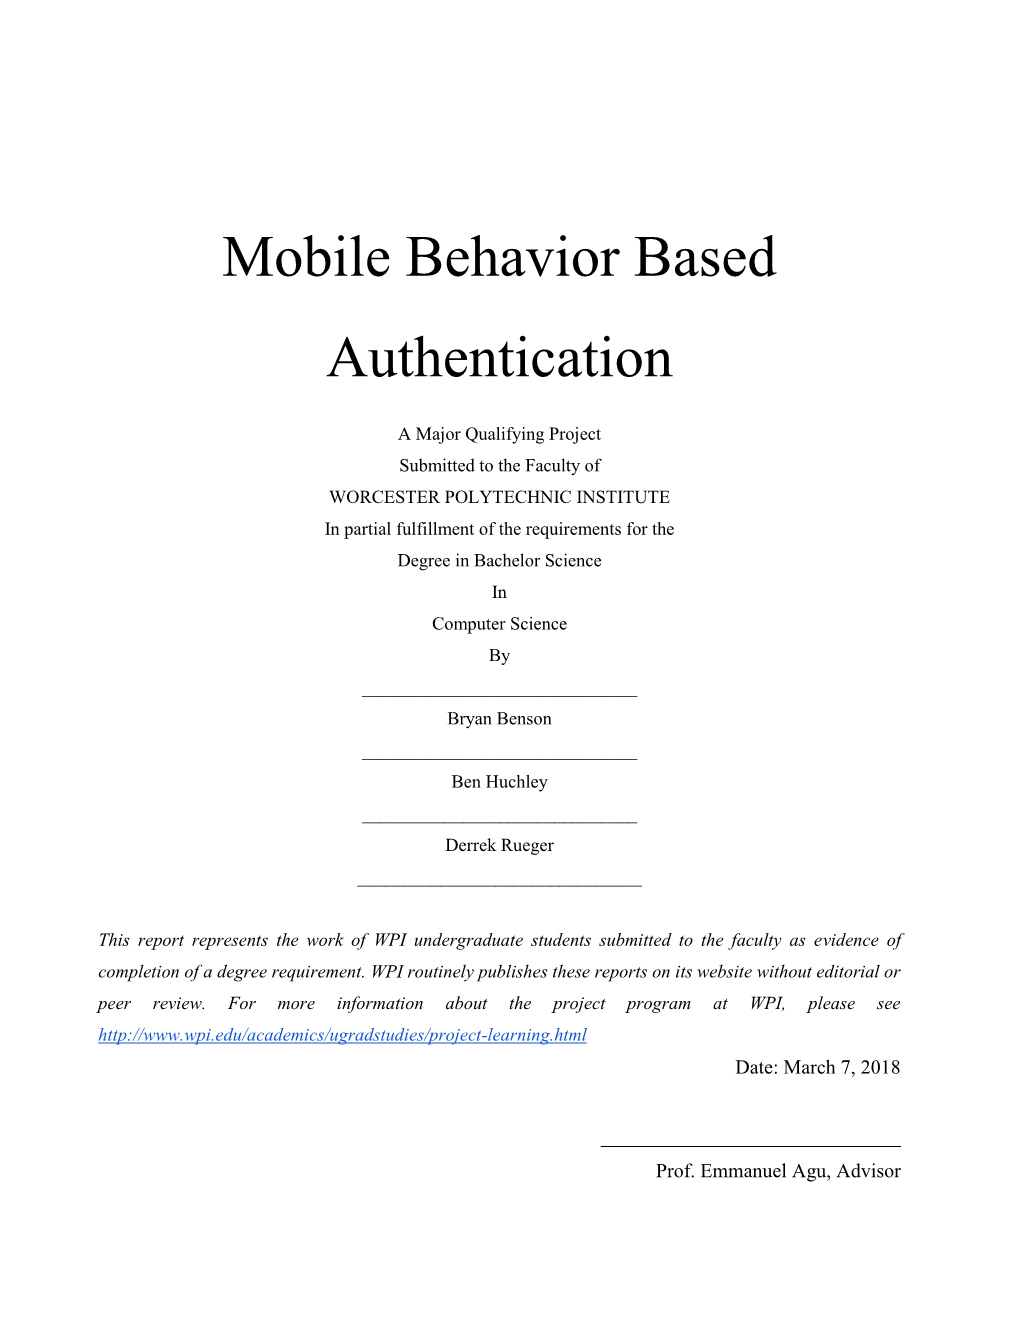 Mobile Behavior Based Authentication